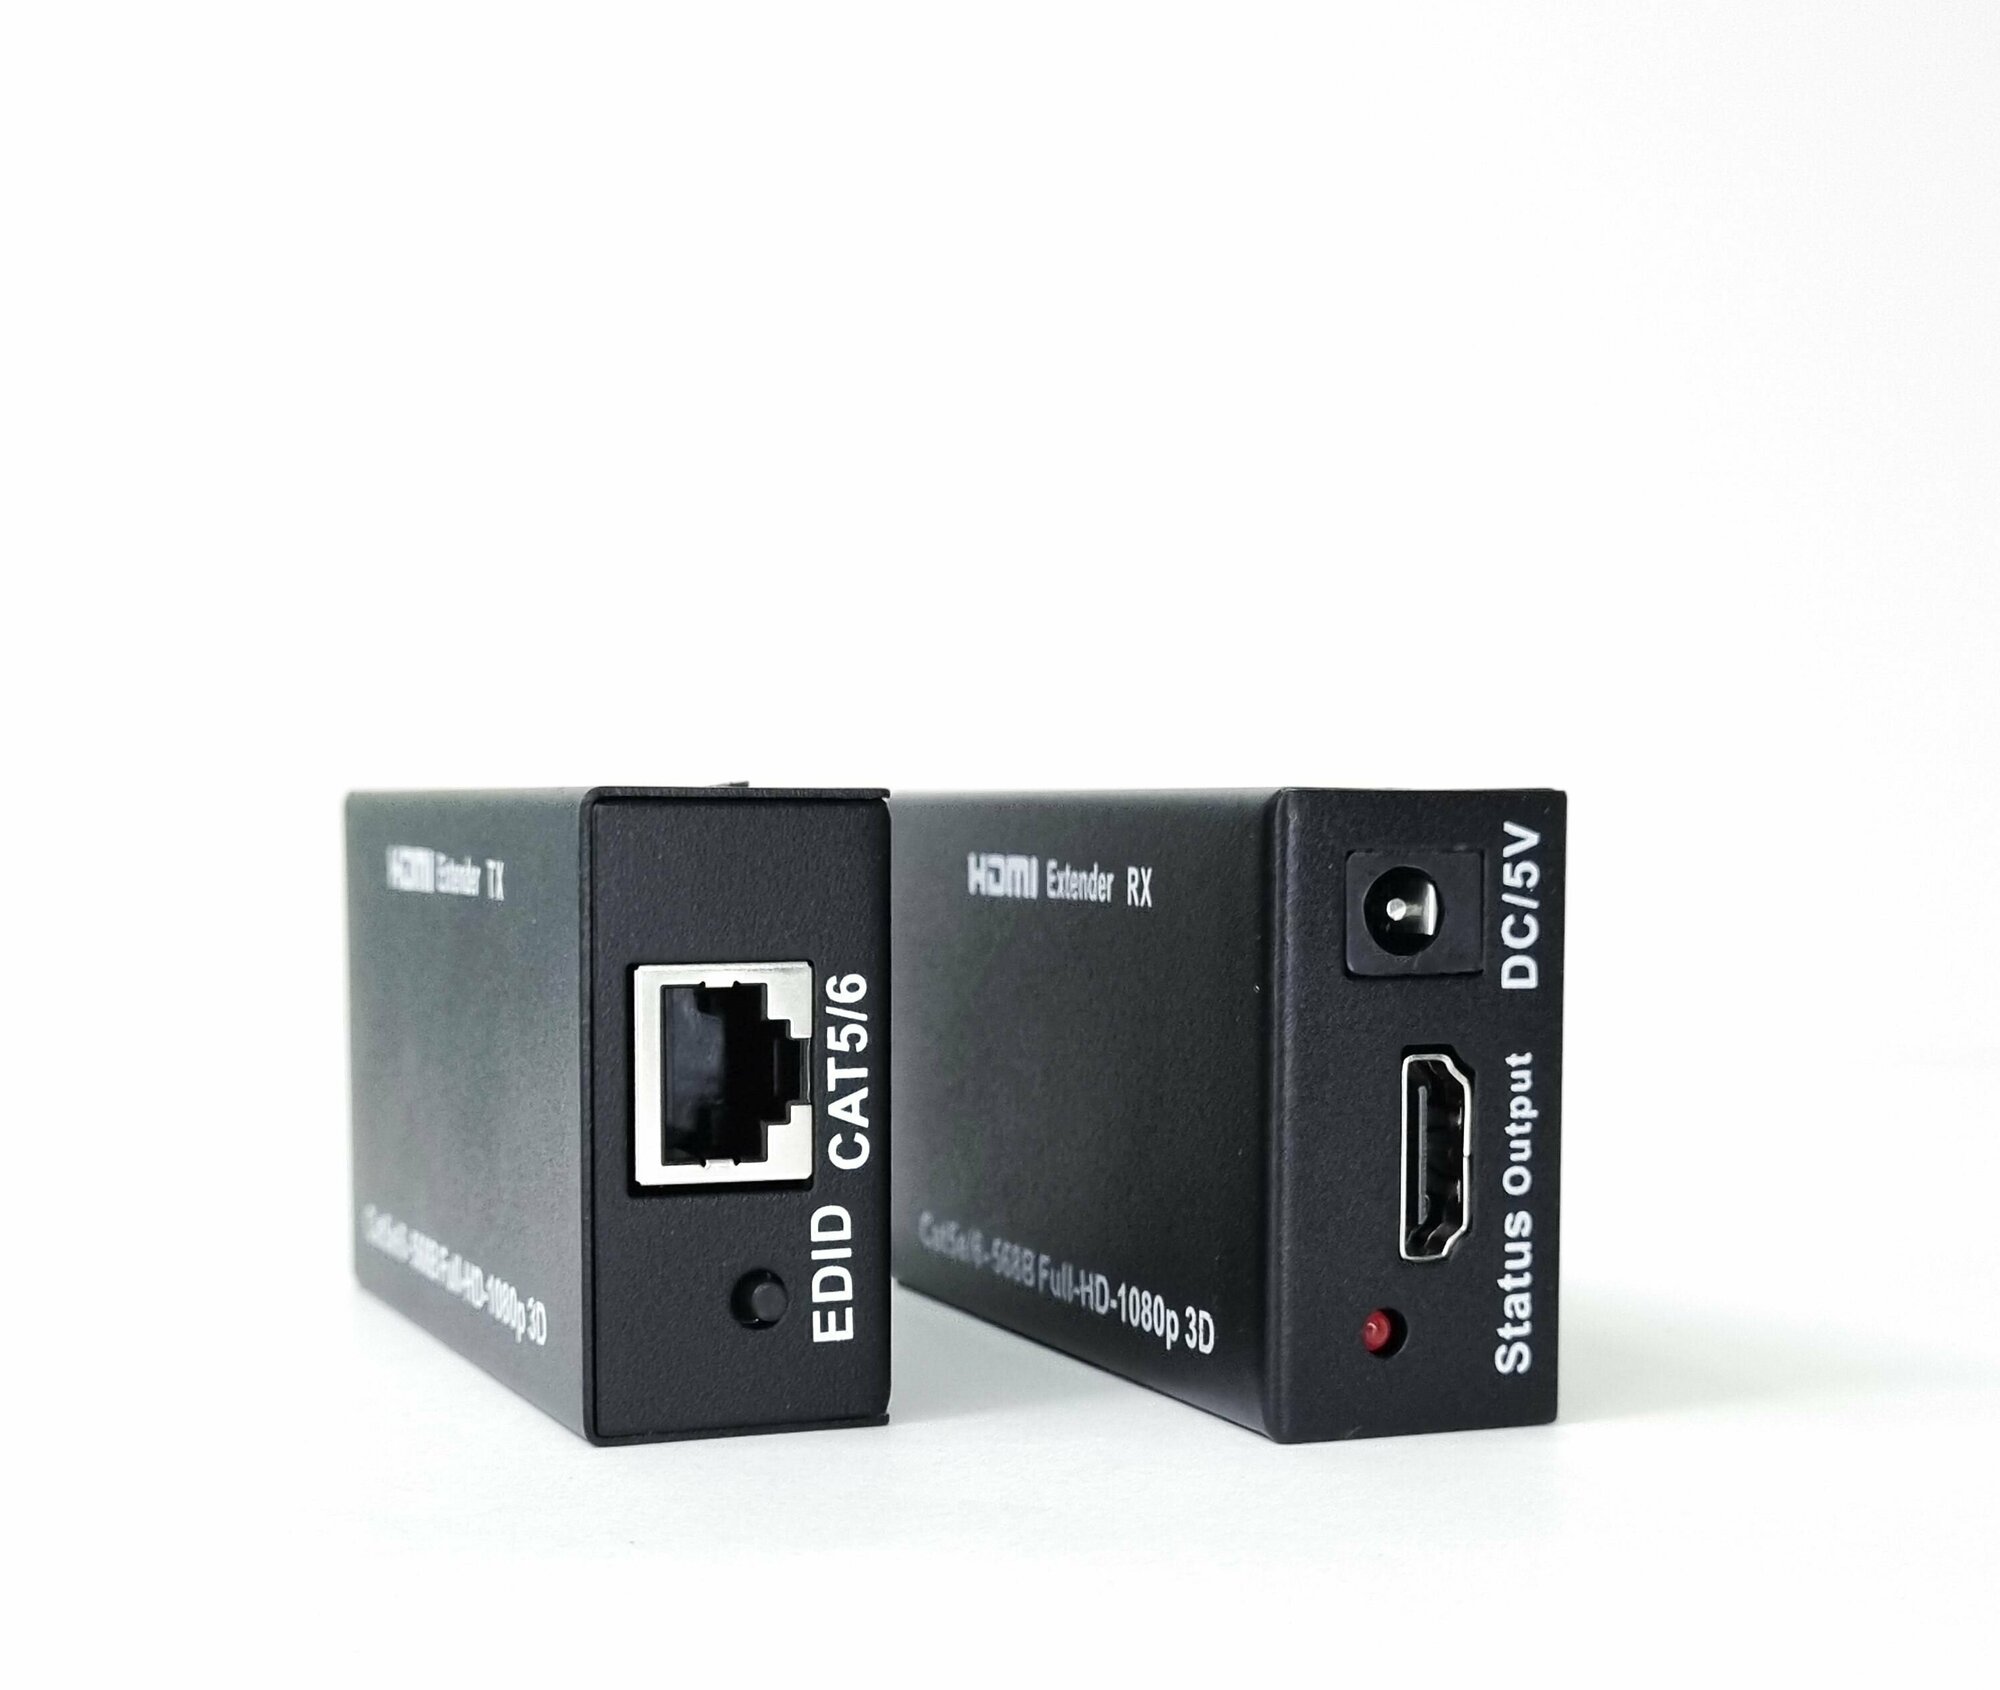 Активный удлинитель HDMI по витой паре до 60 метров CAT5E/6-568B Full HD-1080P